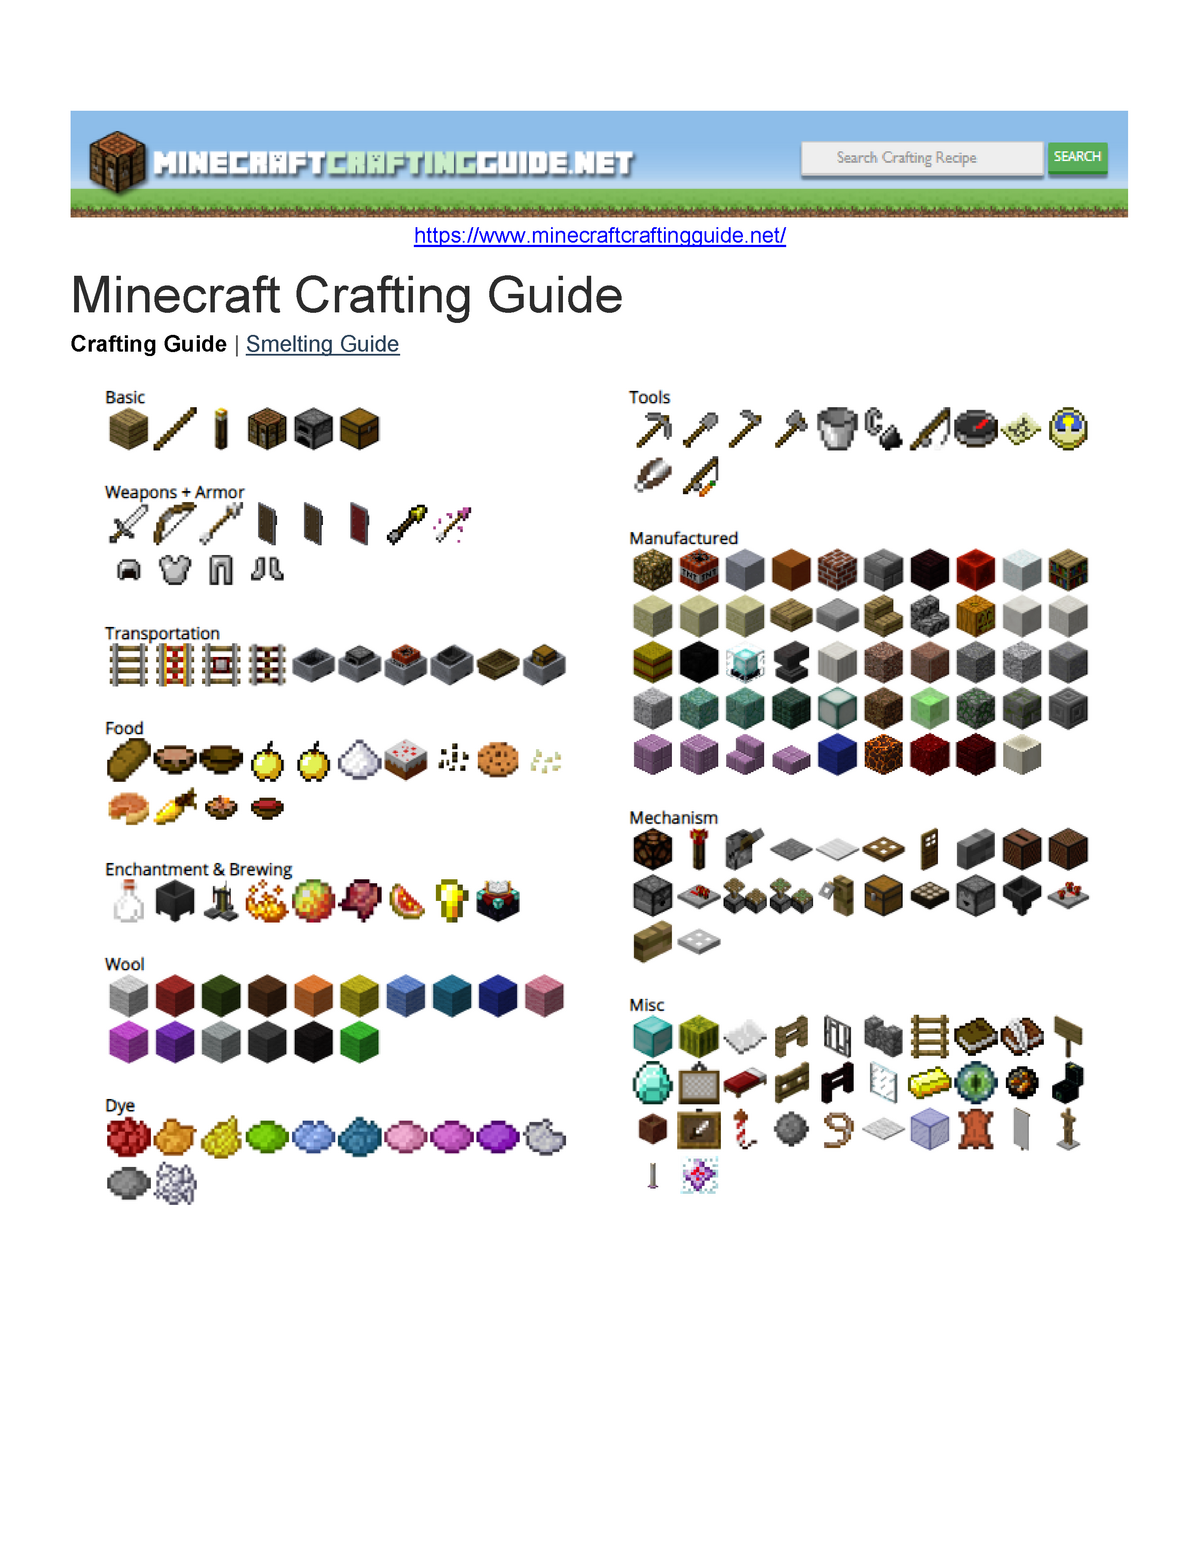 crafting-guide-minecraft-crafting-guide-minecraft-crafting